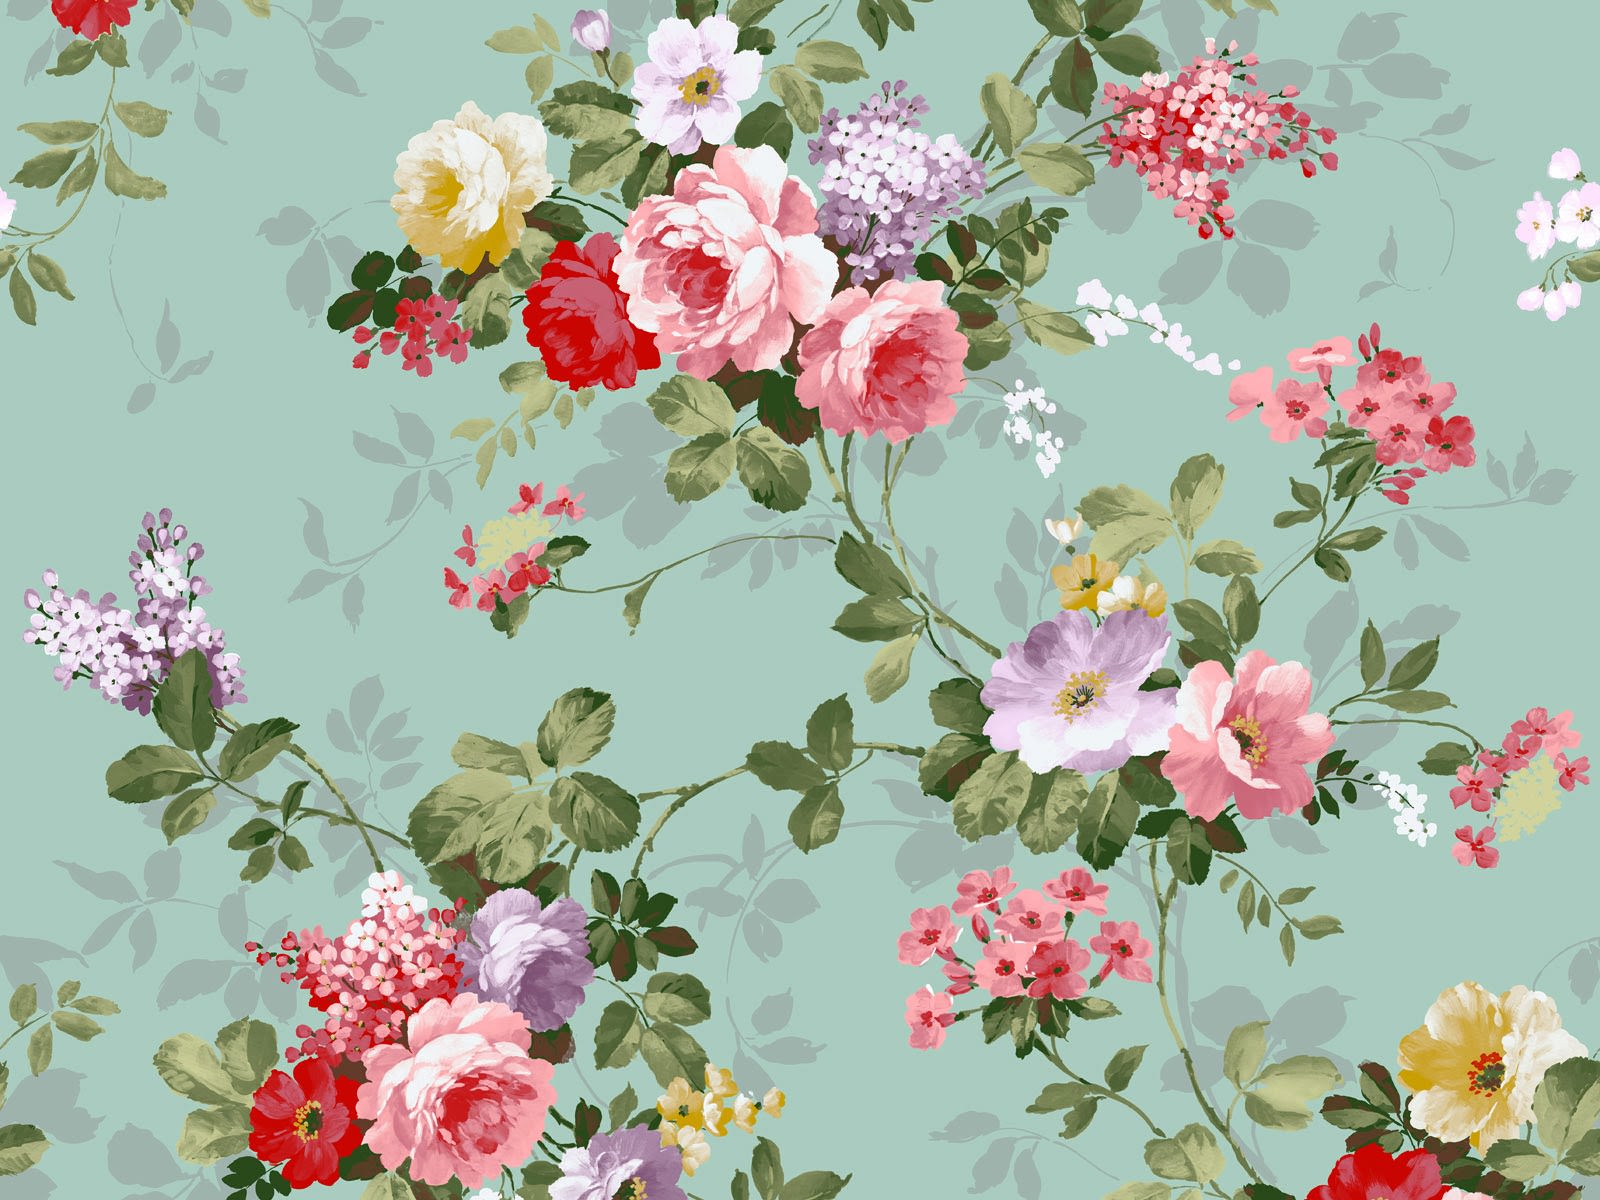 Download 15 Free Floral Vintage Wallpapers